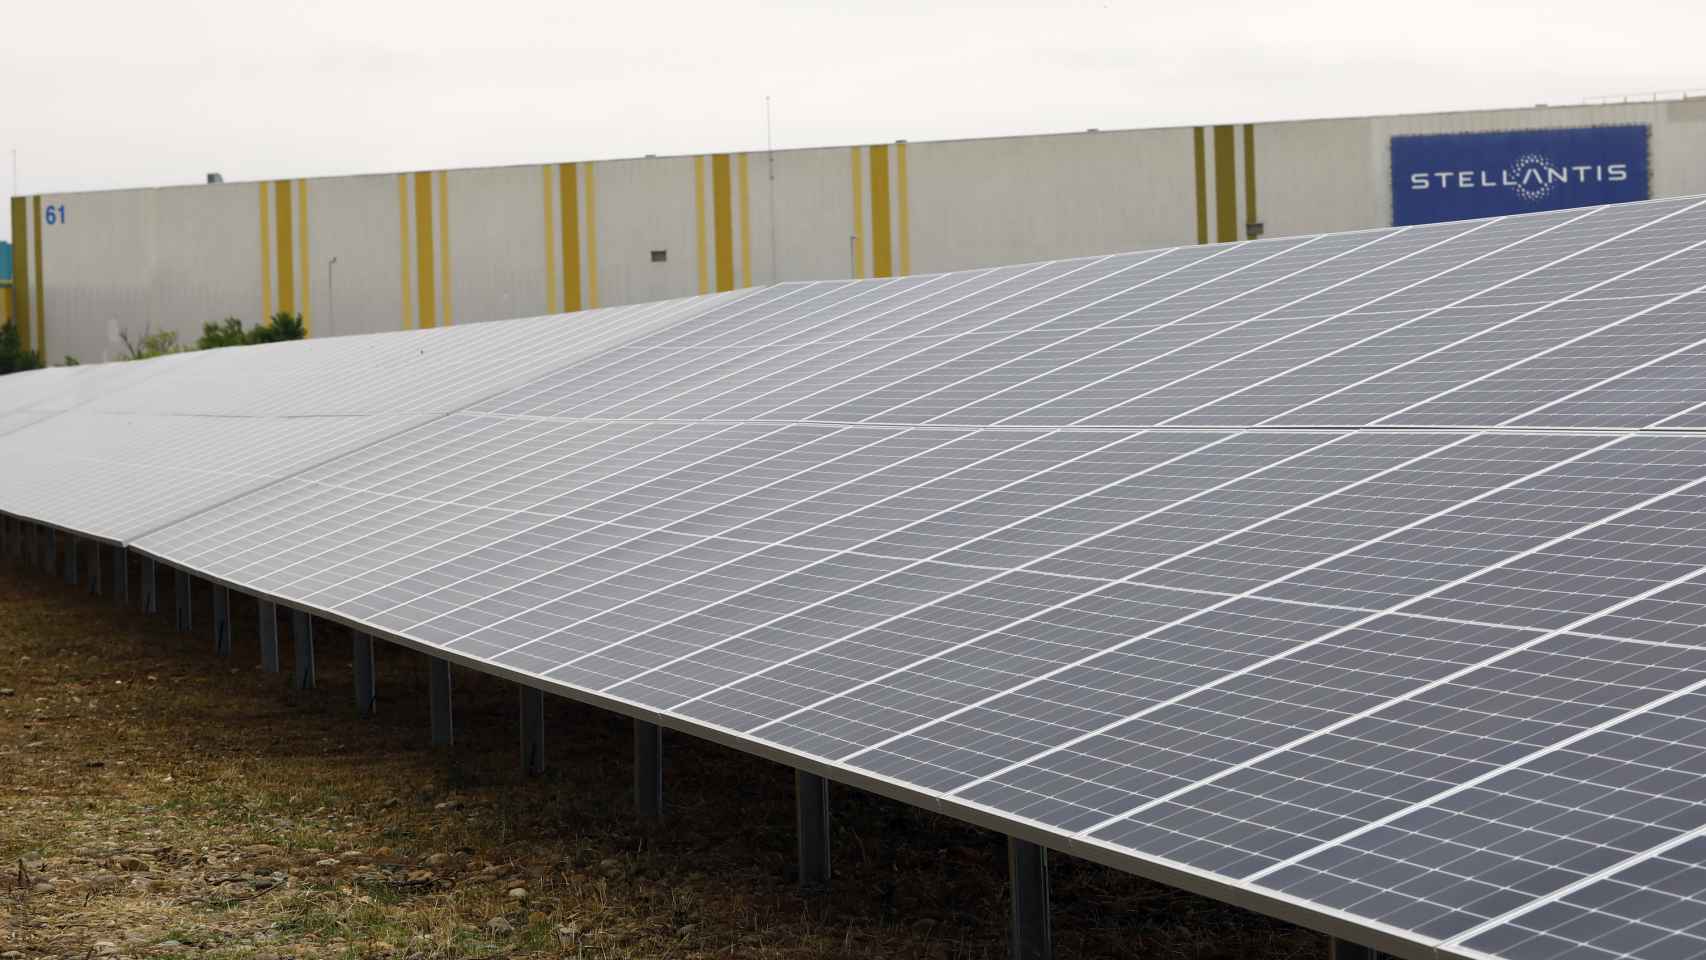 Imagen de la planta fotovoltaica instalada en Stellantis Zaragoza.